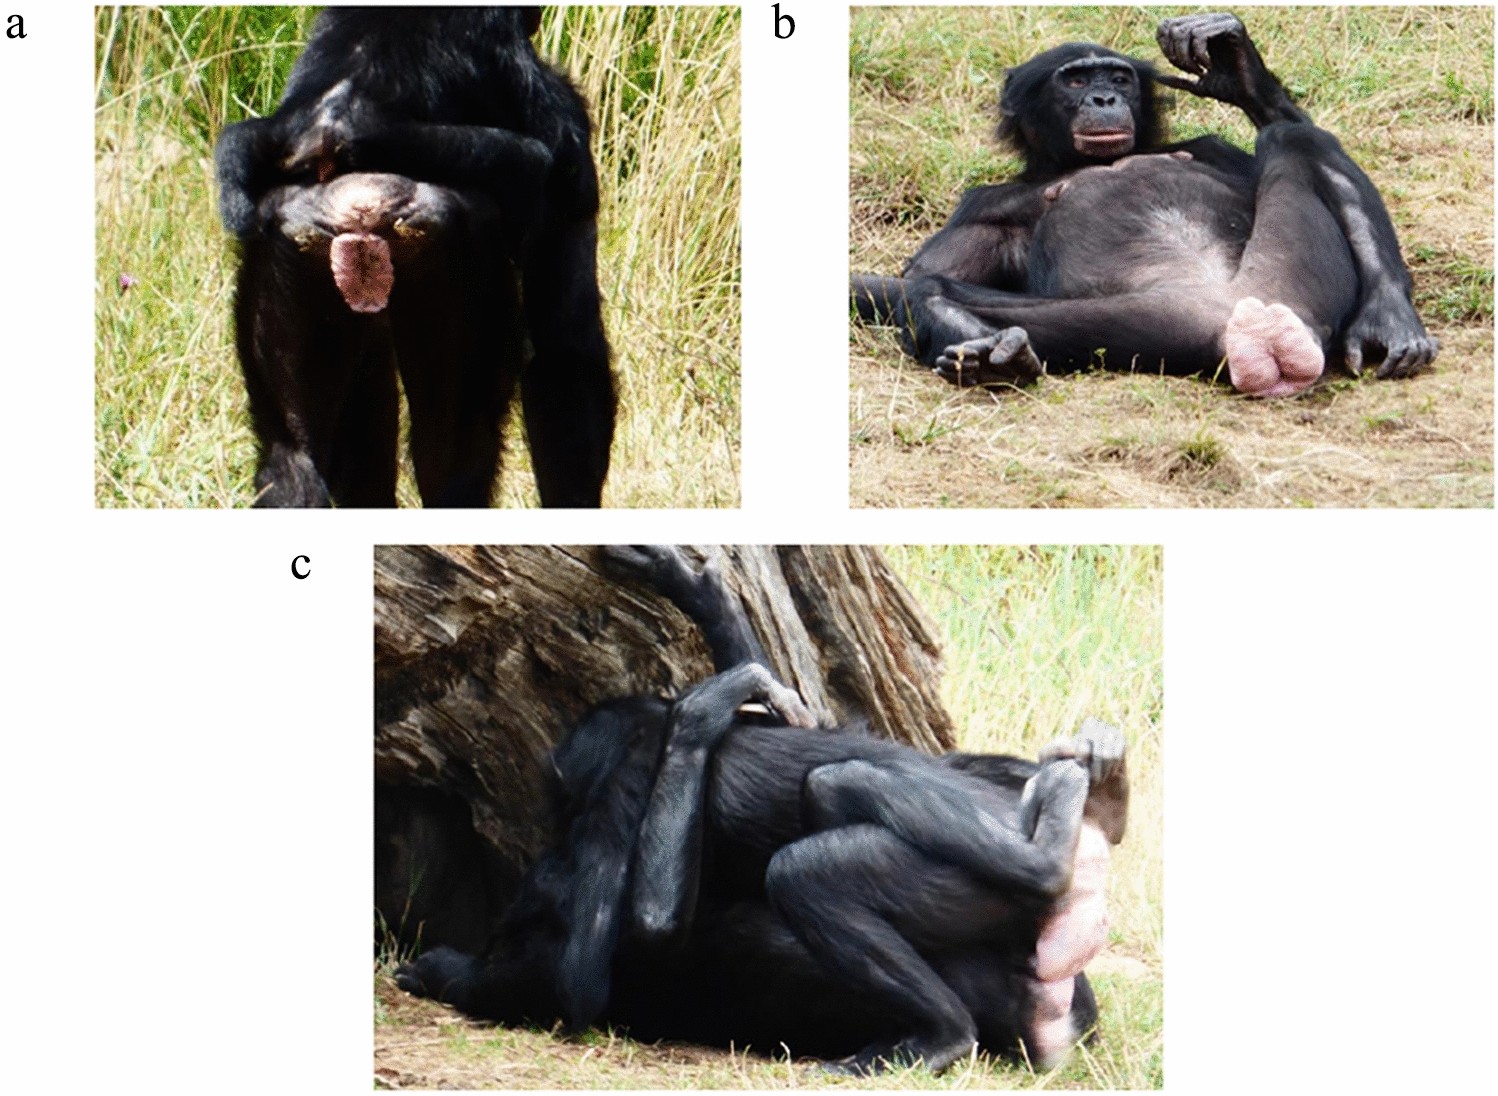 Female bonobos show social swelling by synchronizing their maximum